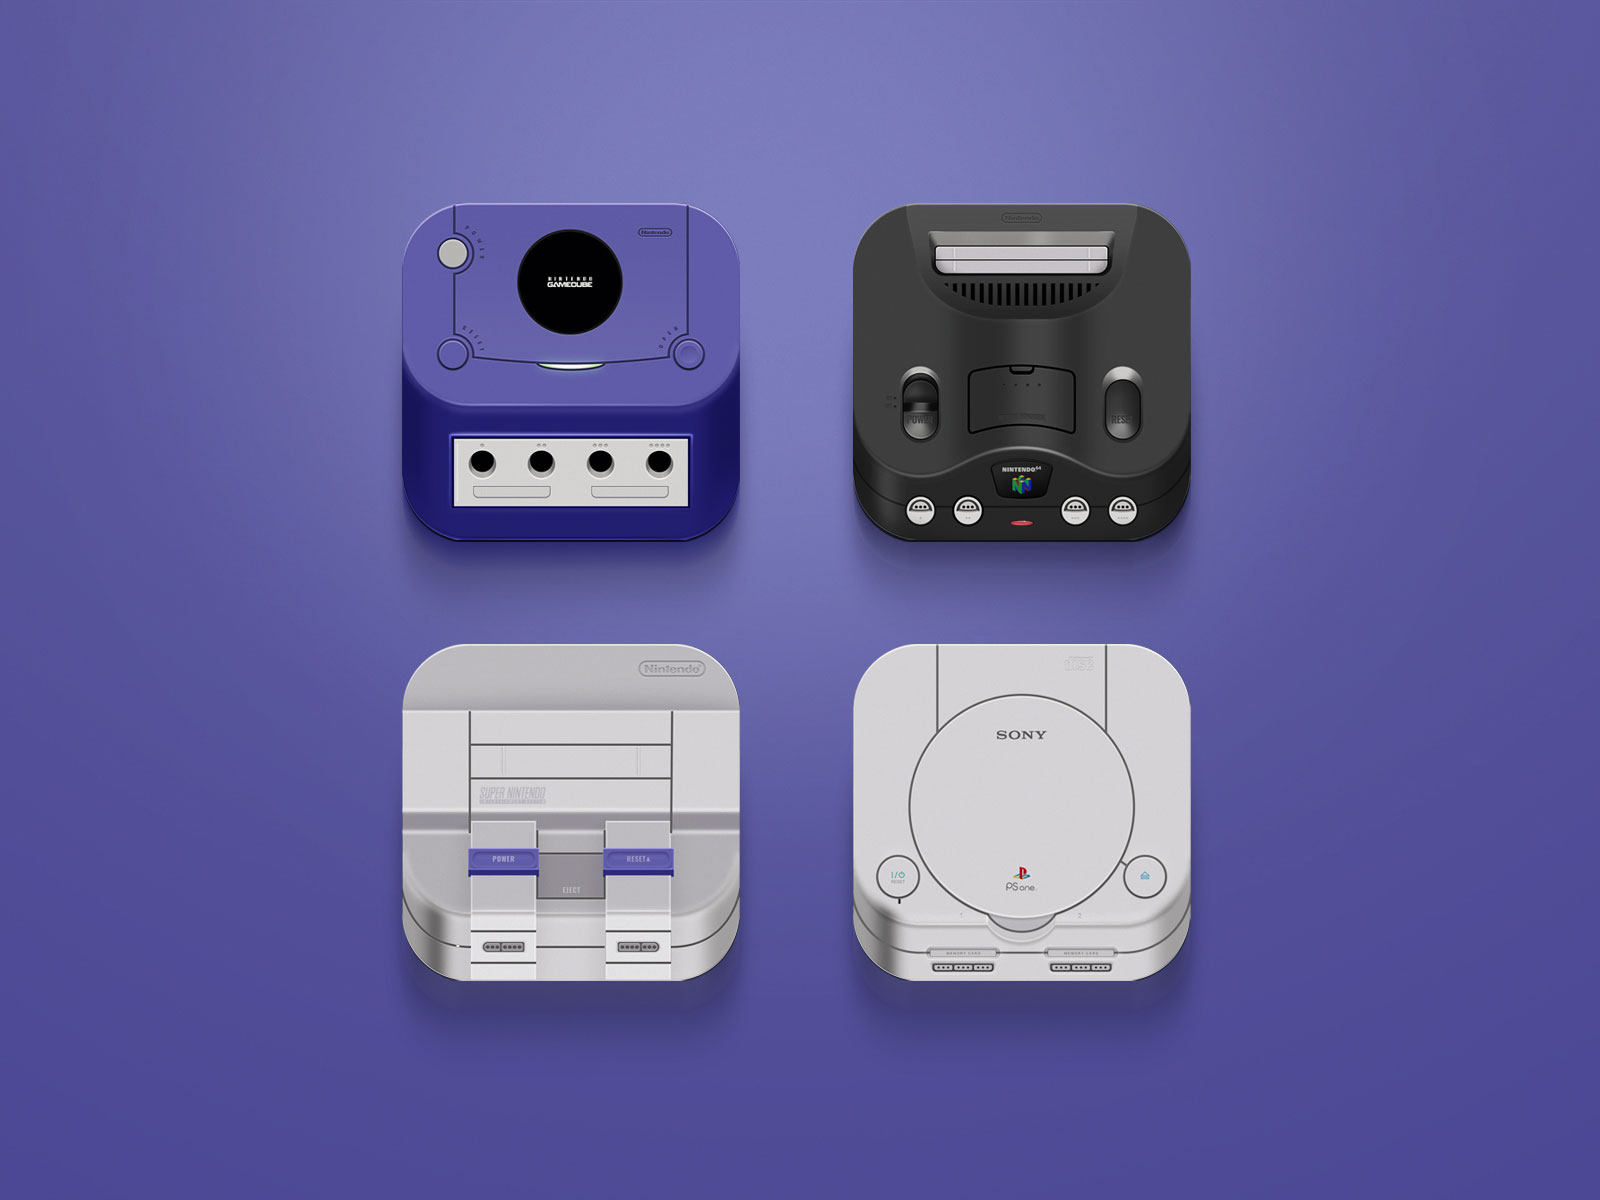 emulator icon